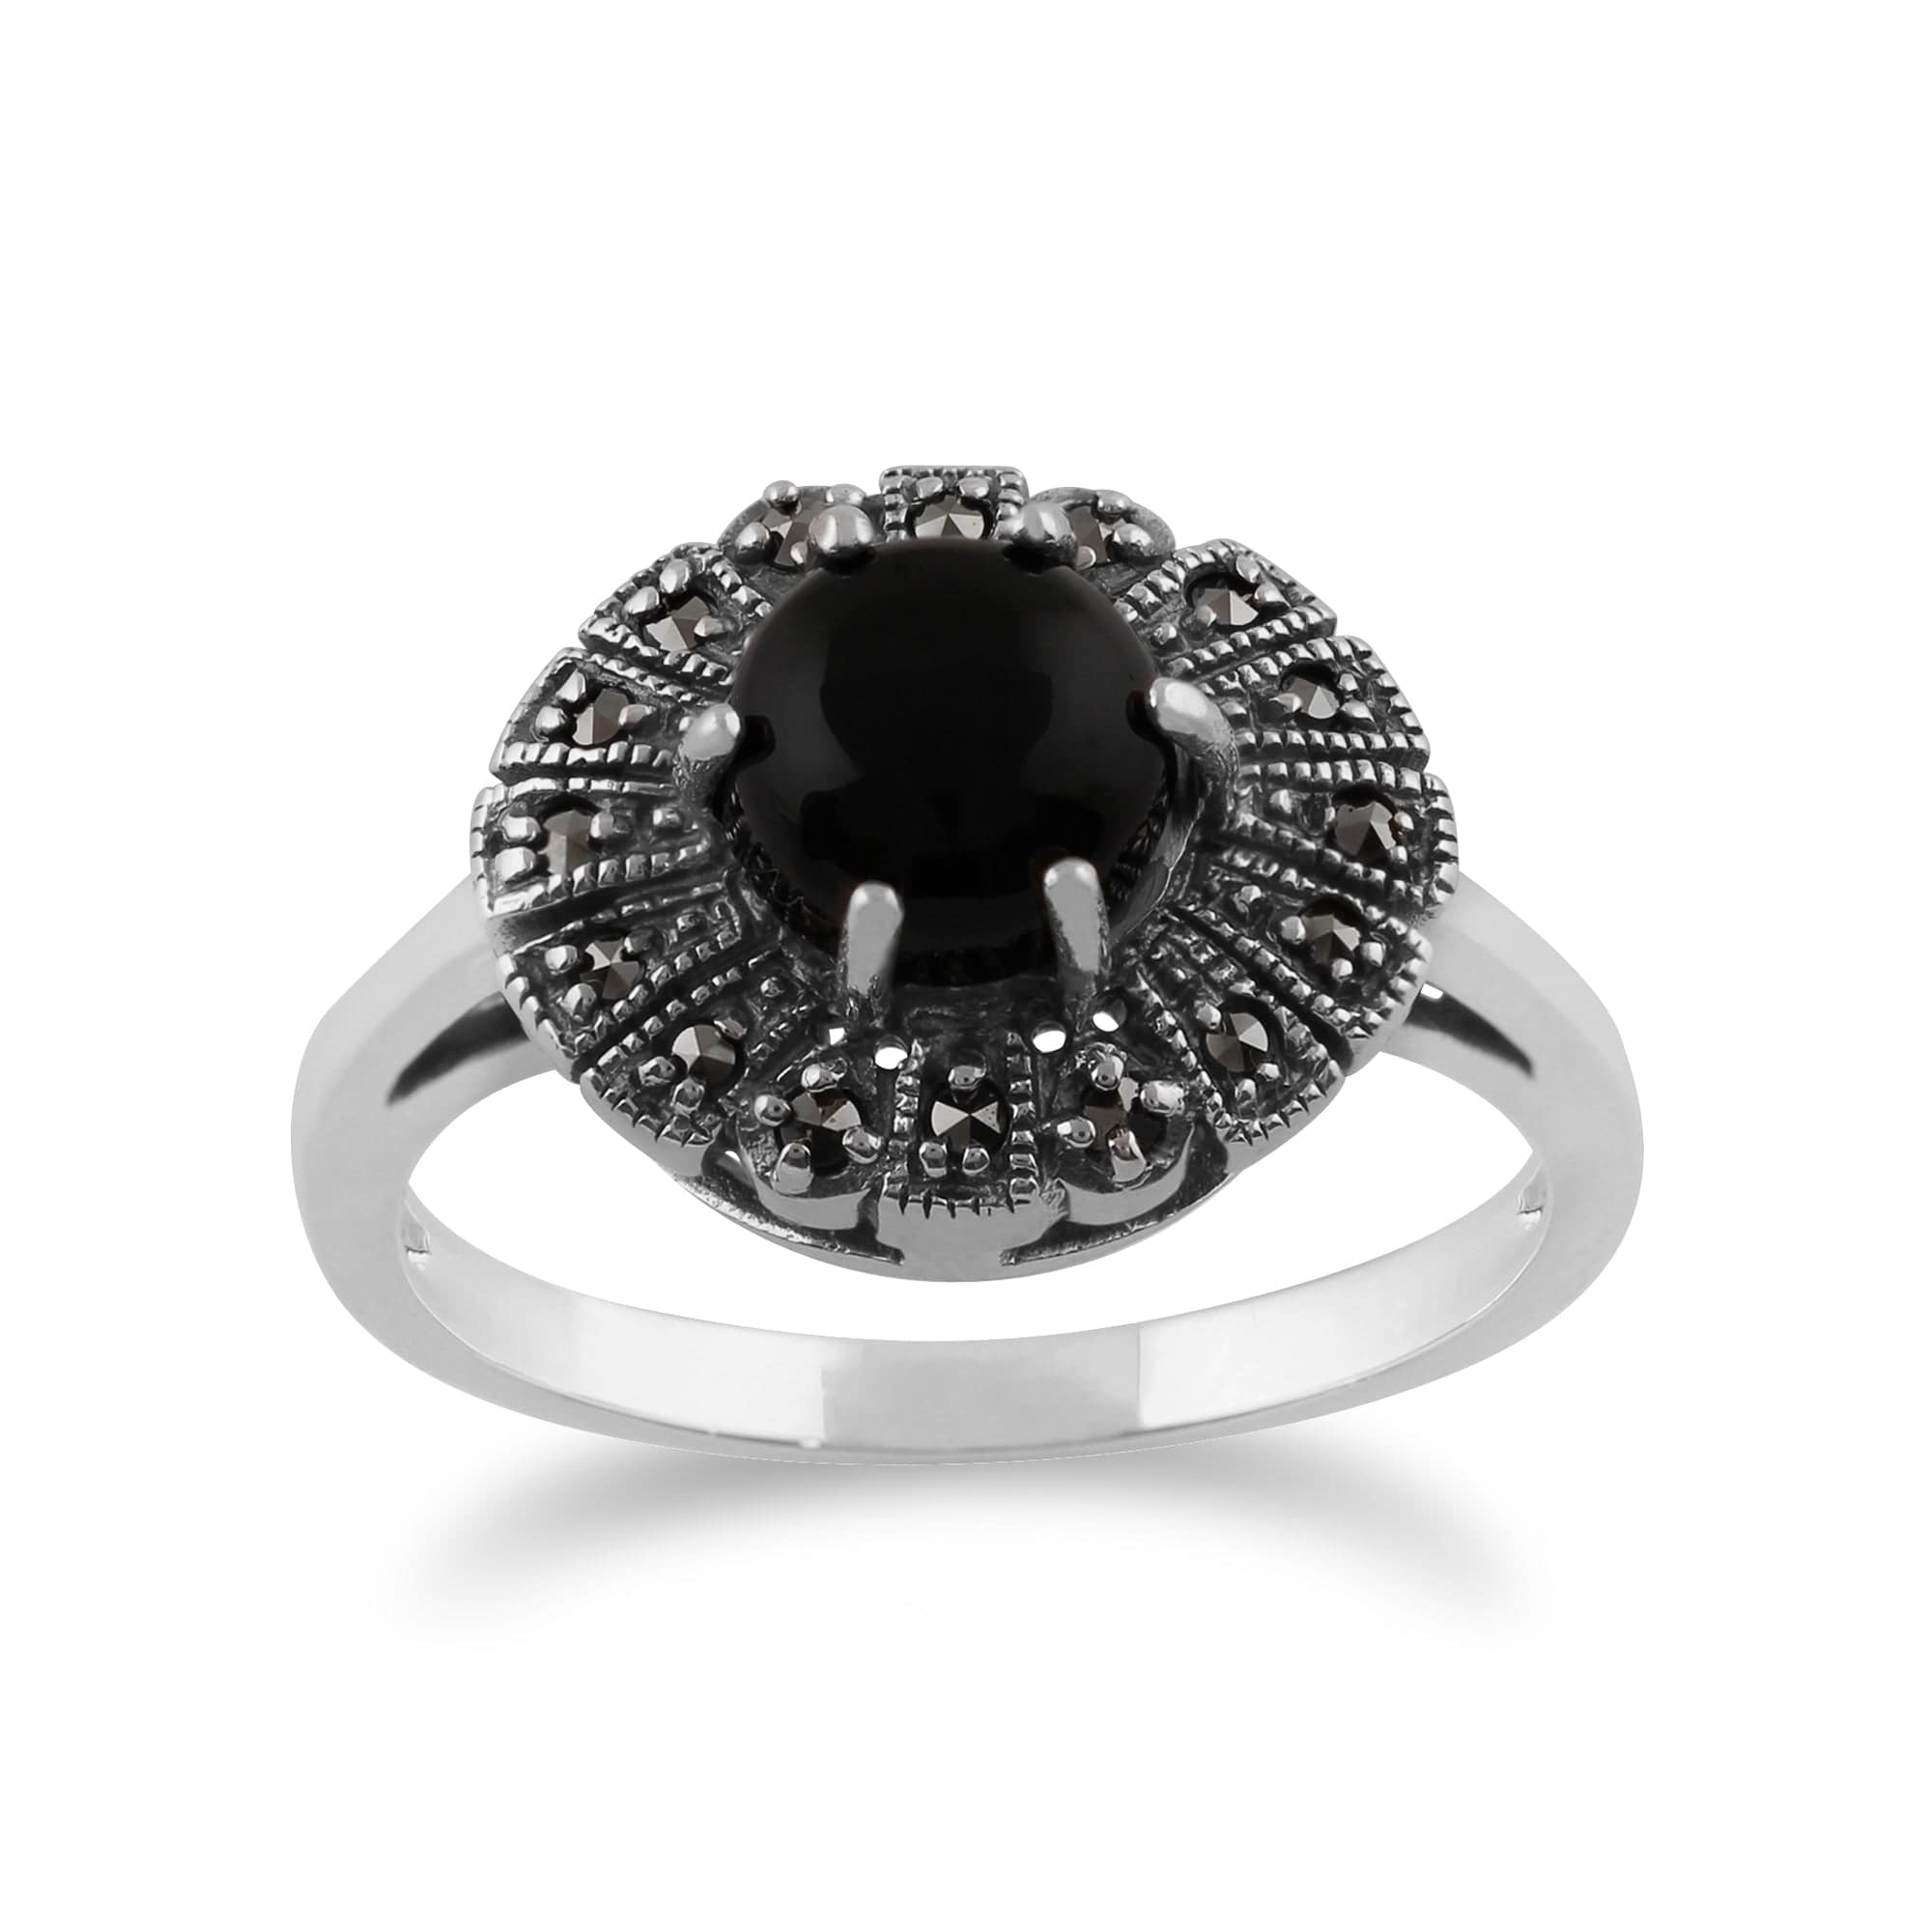 Gemondo 925 Sterling Silver 0.75ct Black Onyx & Marcasite Art Deco Ring Image 1